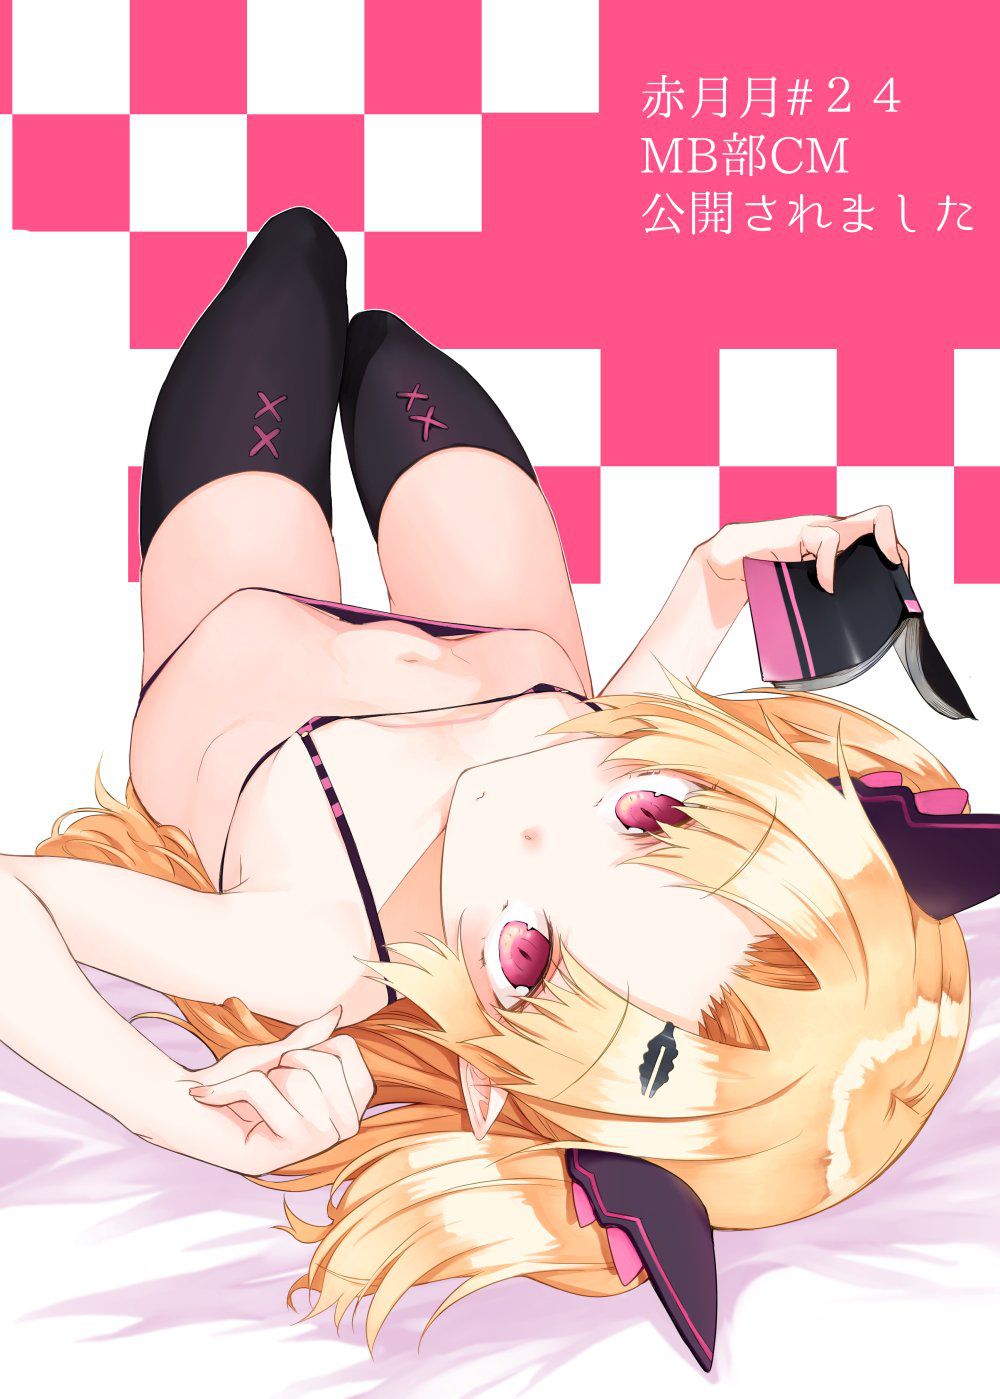 【Erotic Anime Summary】 Vtuber Bishōjo Vampire Akatsuki Yuni's Erotic Image Summary [Secondary Erotic] 28